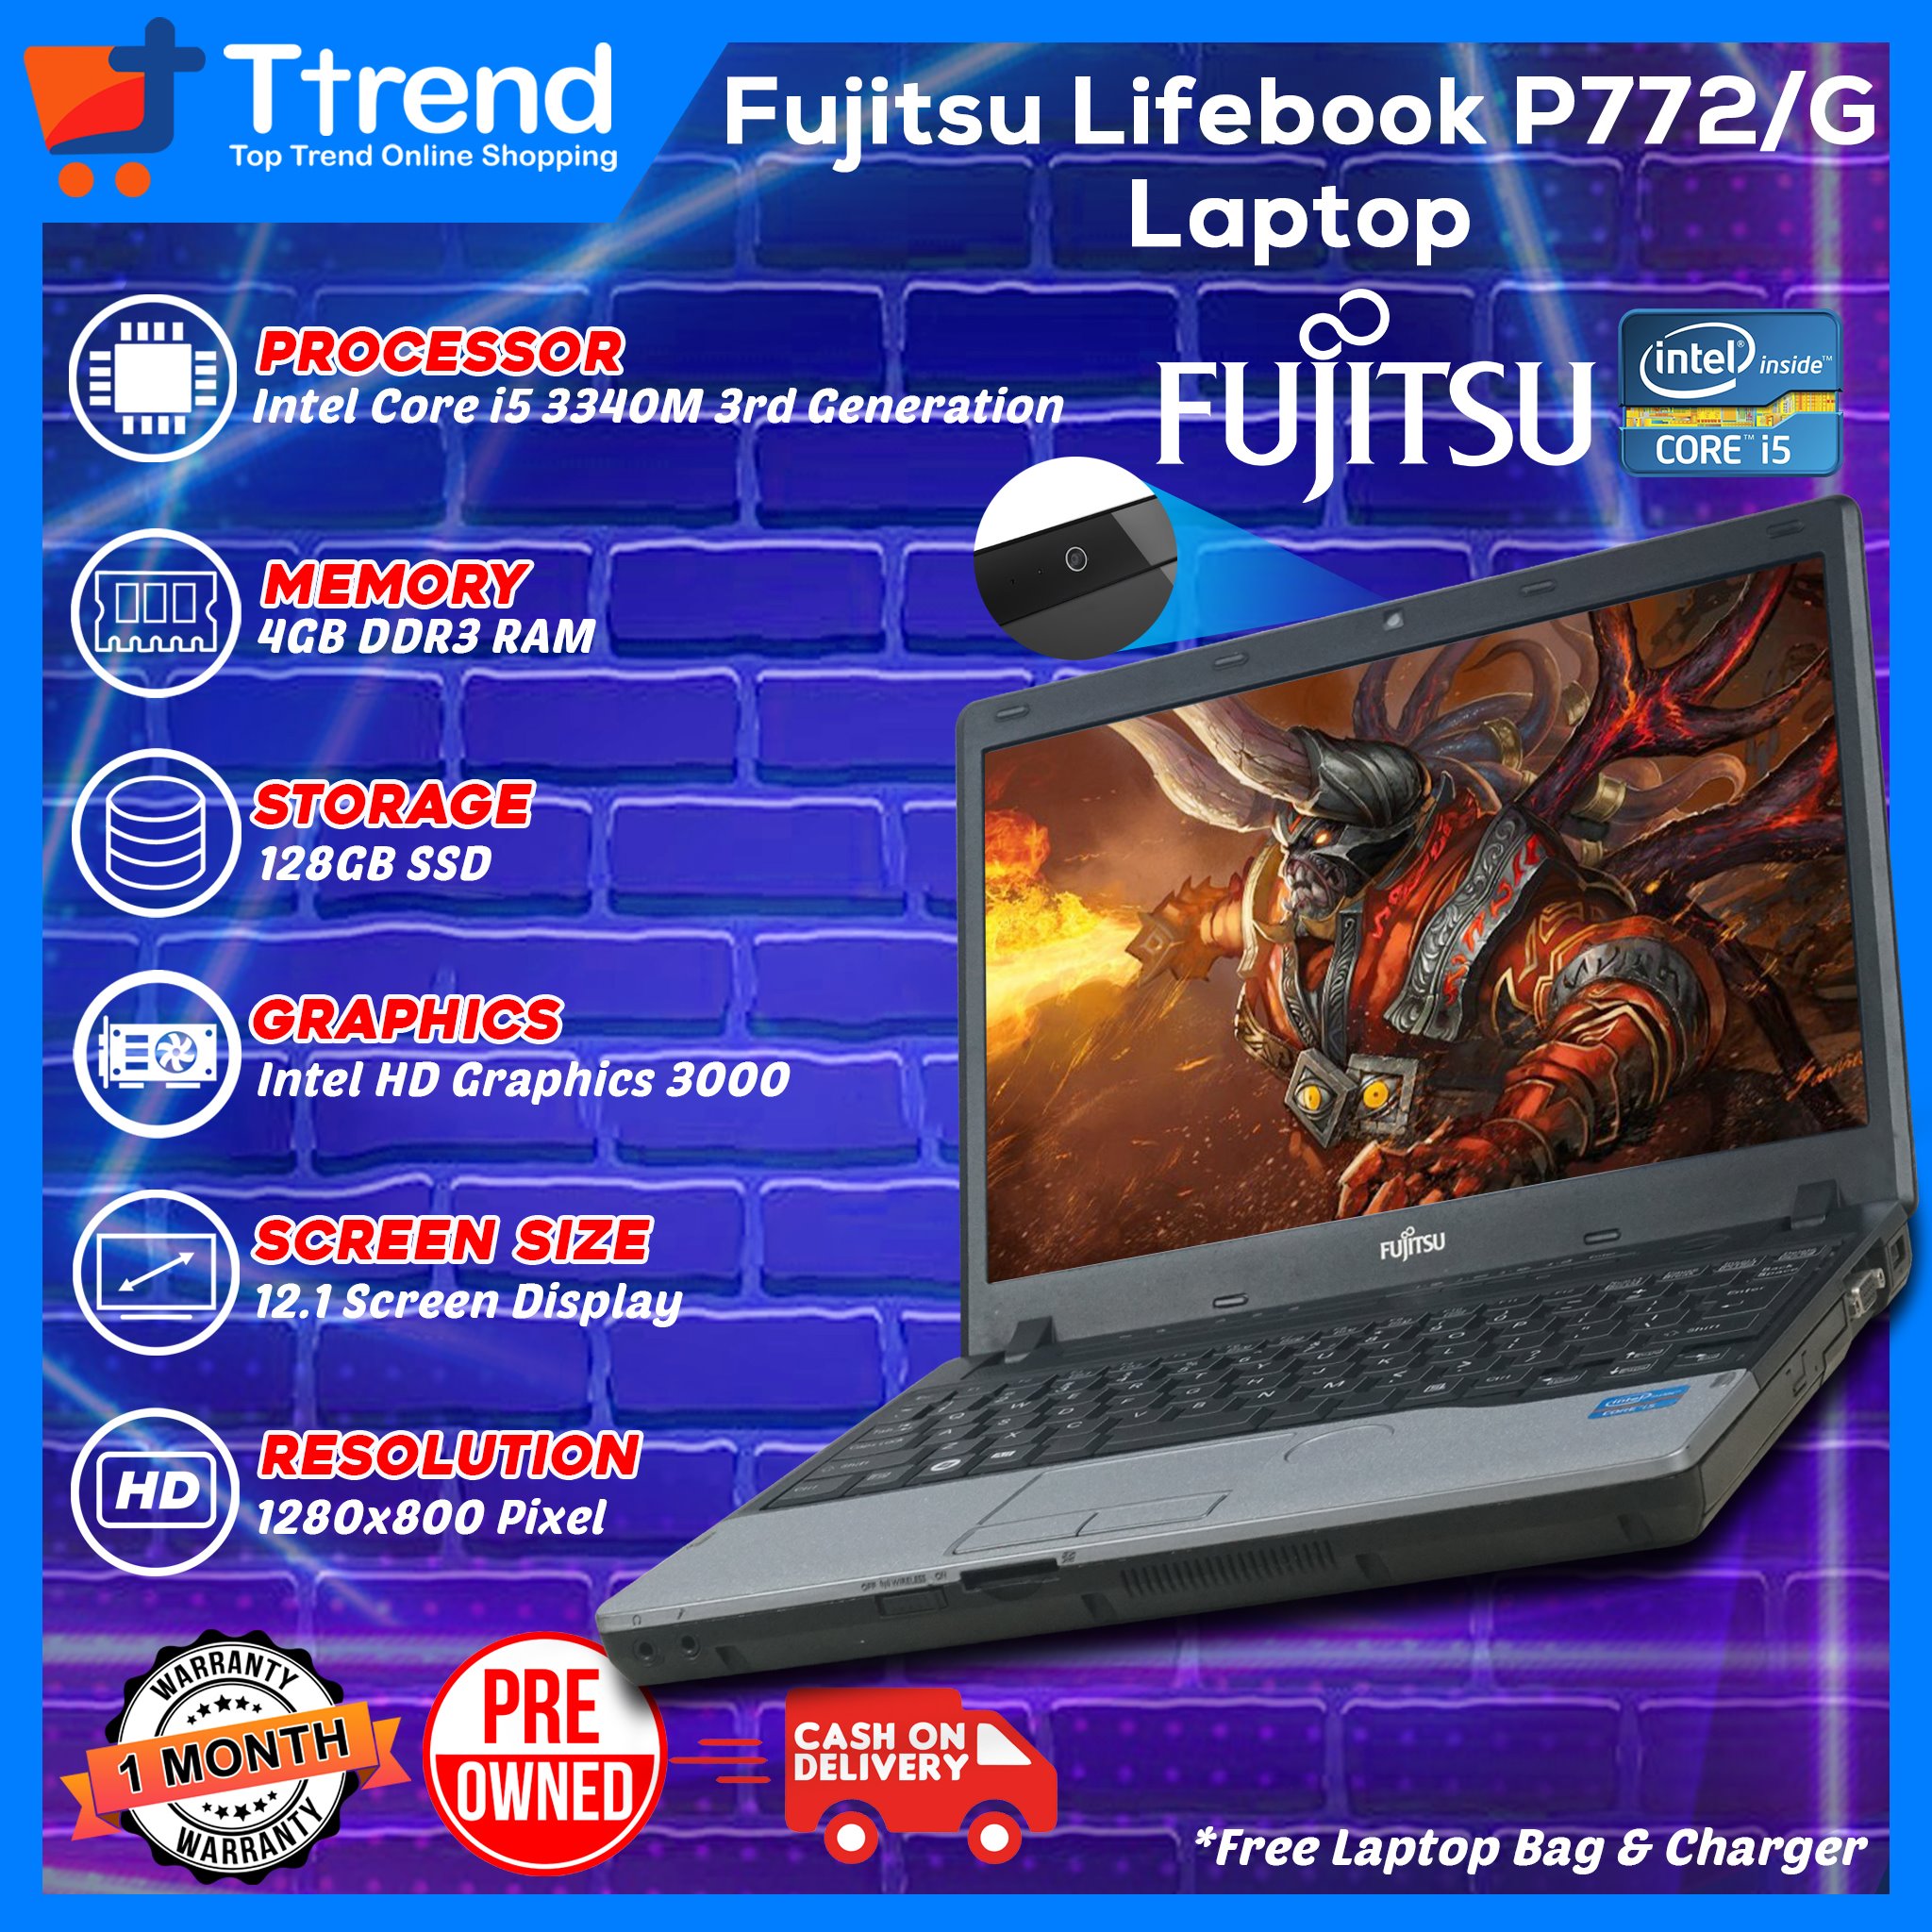 Fujitsu Lifebook P772/G Laptop | Intel Core i5 3340m 4GB RAM DDR3